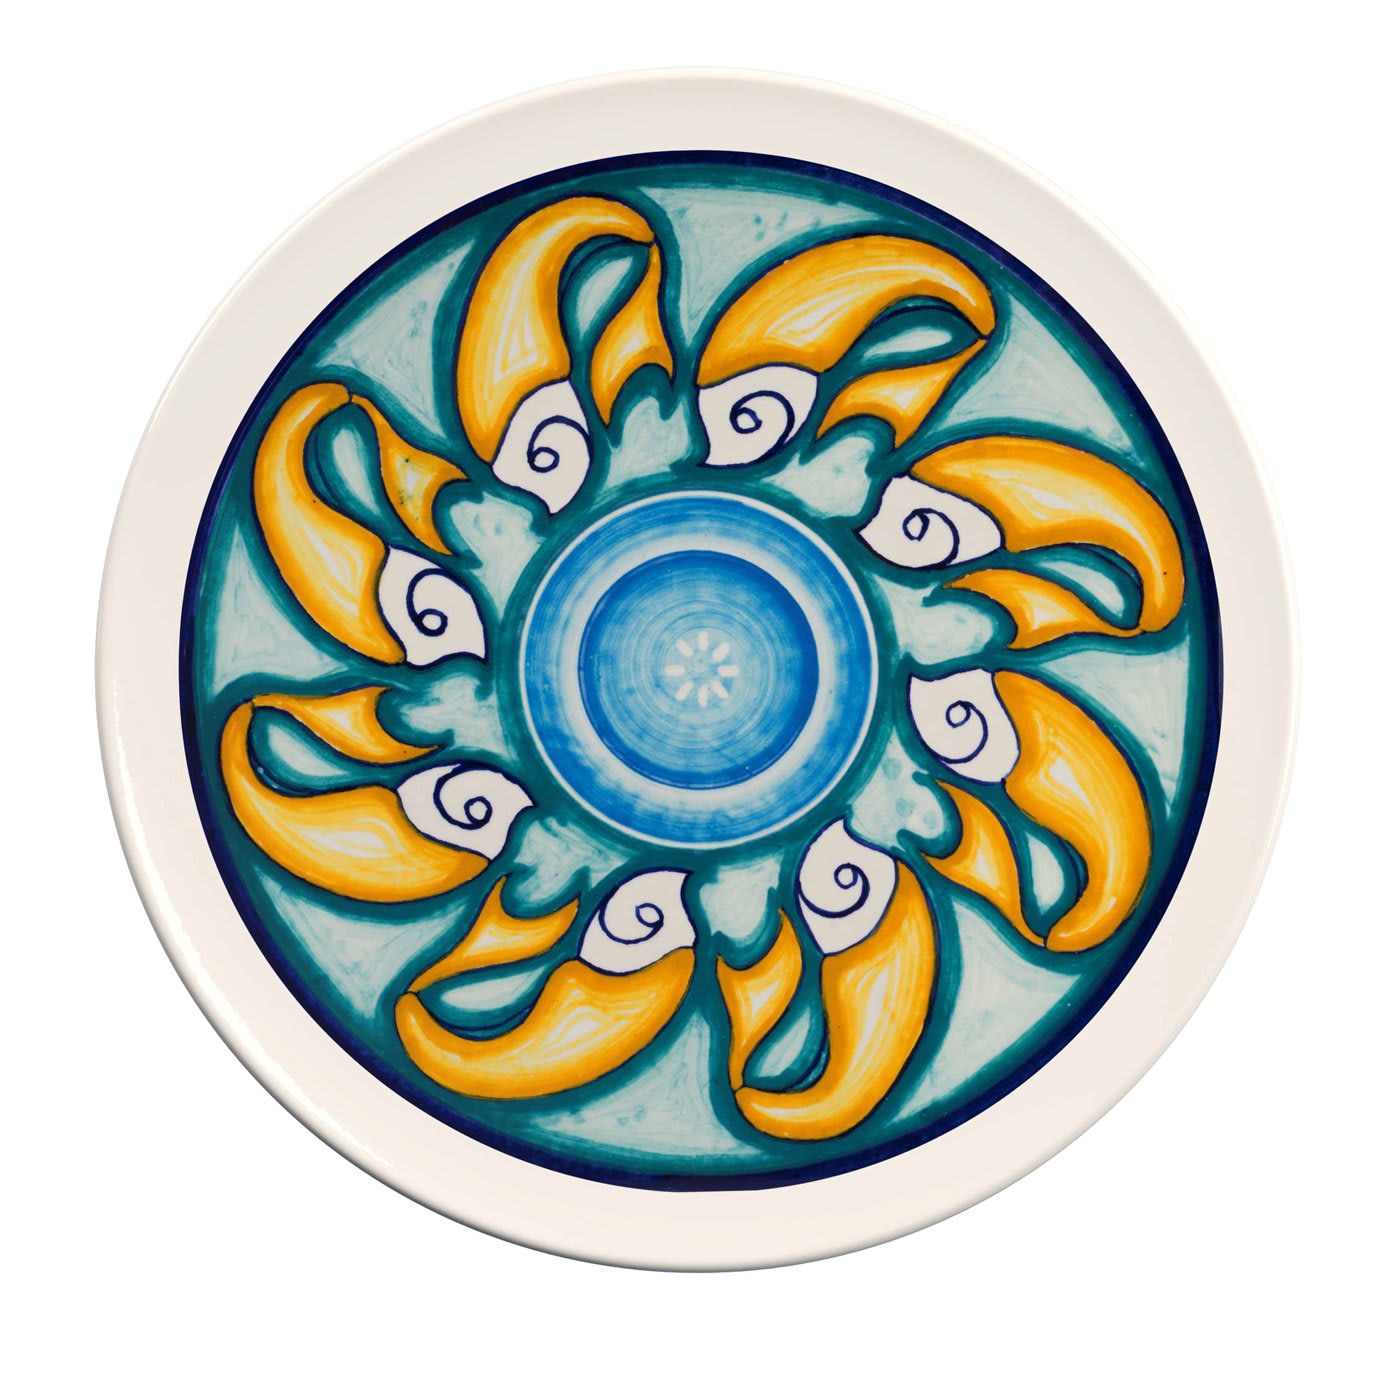 Colapesce Pesci Gialli Decorative Plate #3 - Crisodora